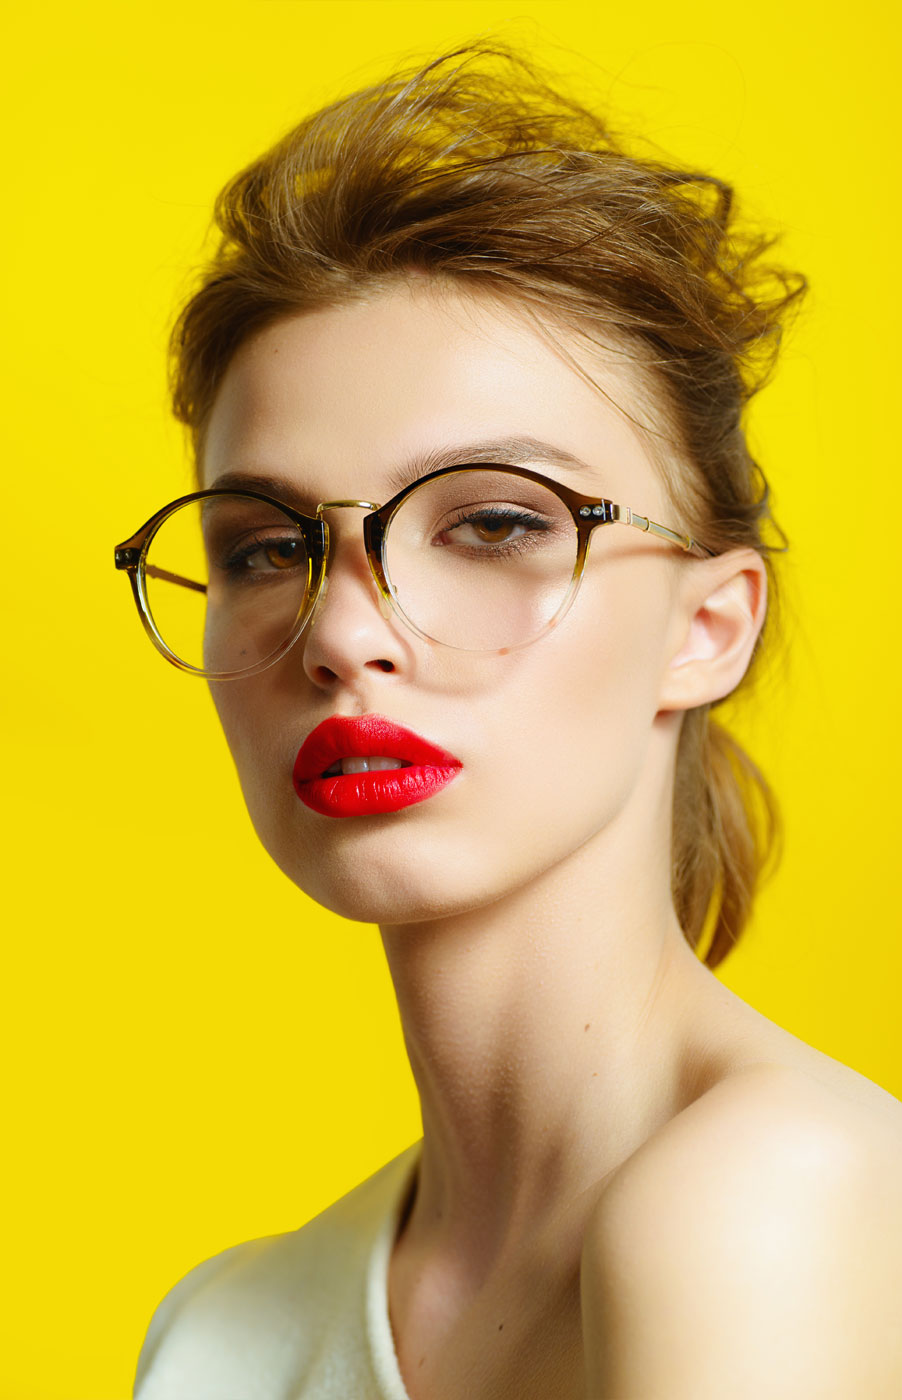 How to order your Varifocal glasses online